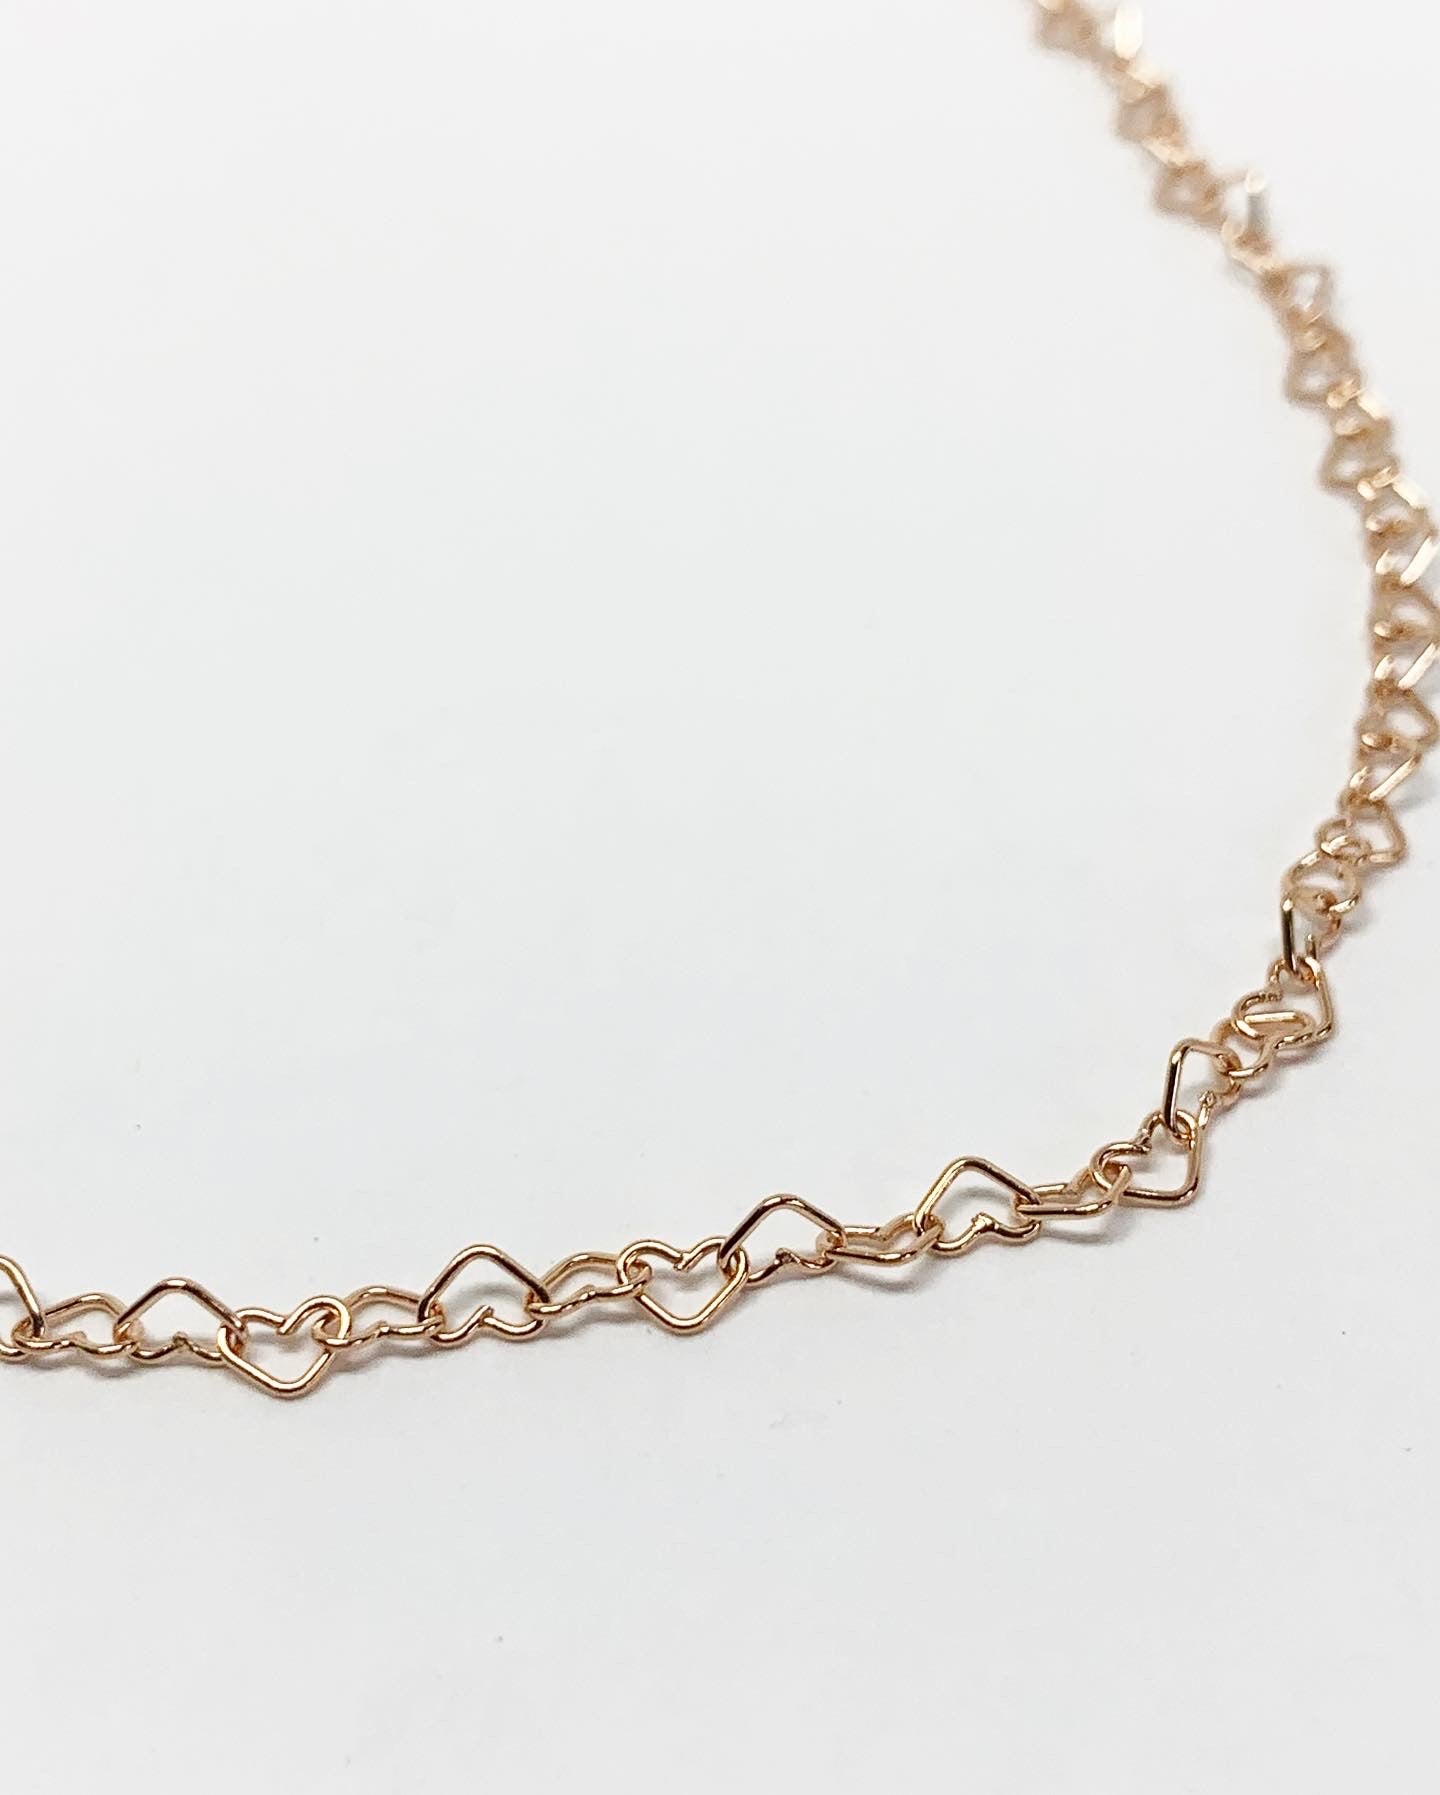 Heart Link Chain - Jennifer Cervelli Jewelry